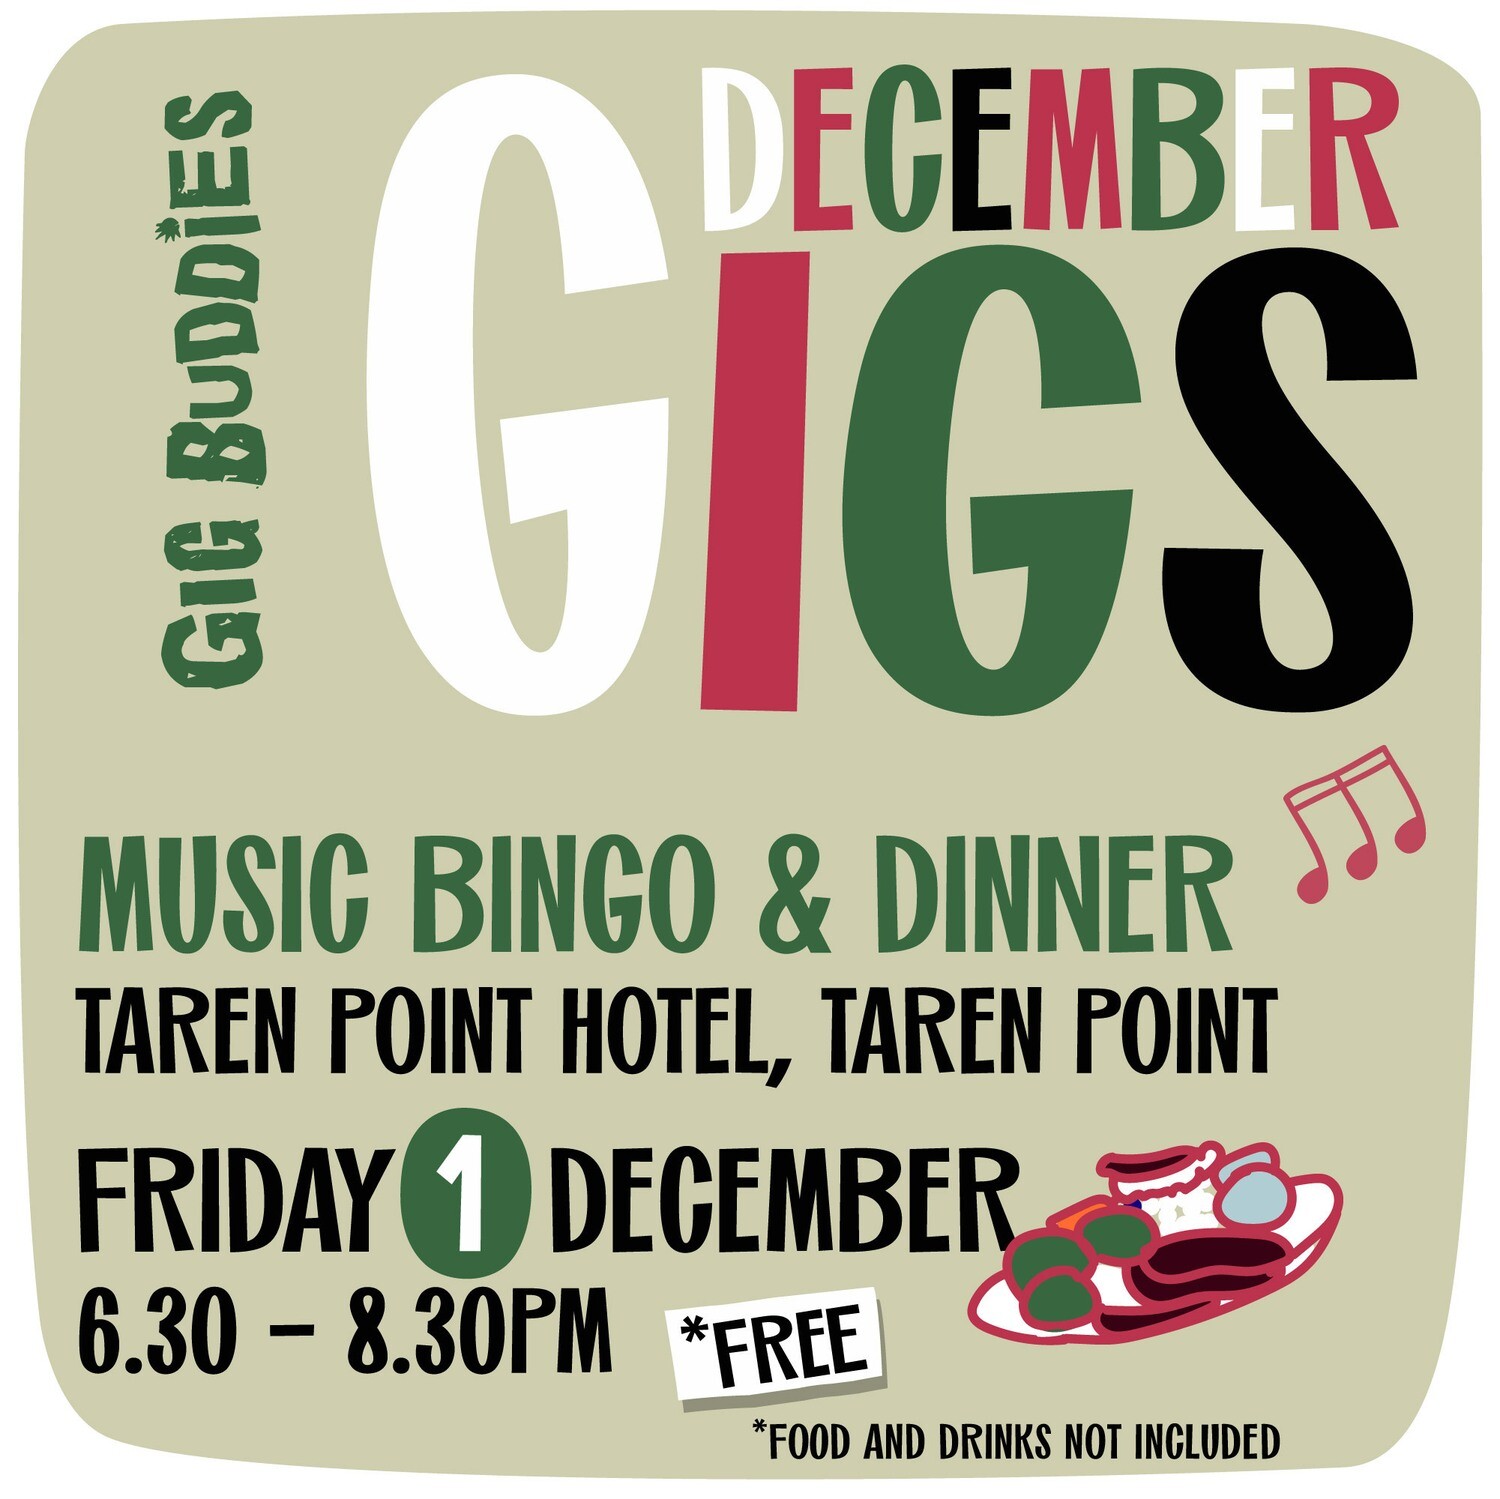 Music bingo and dinner @ Taren Point Hotel - Friday 1 December